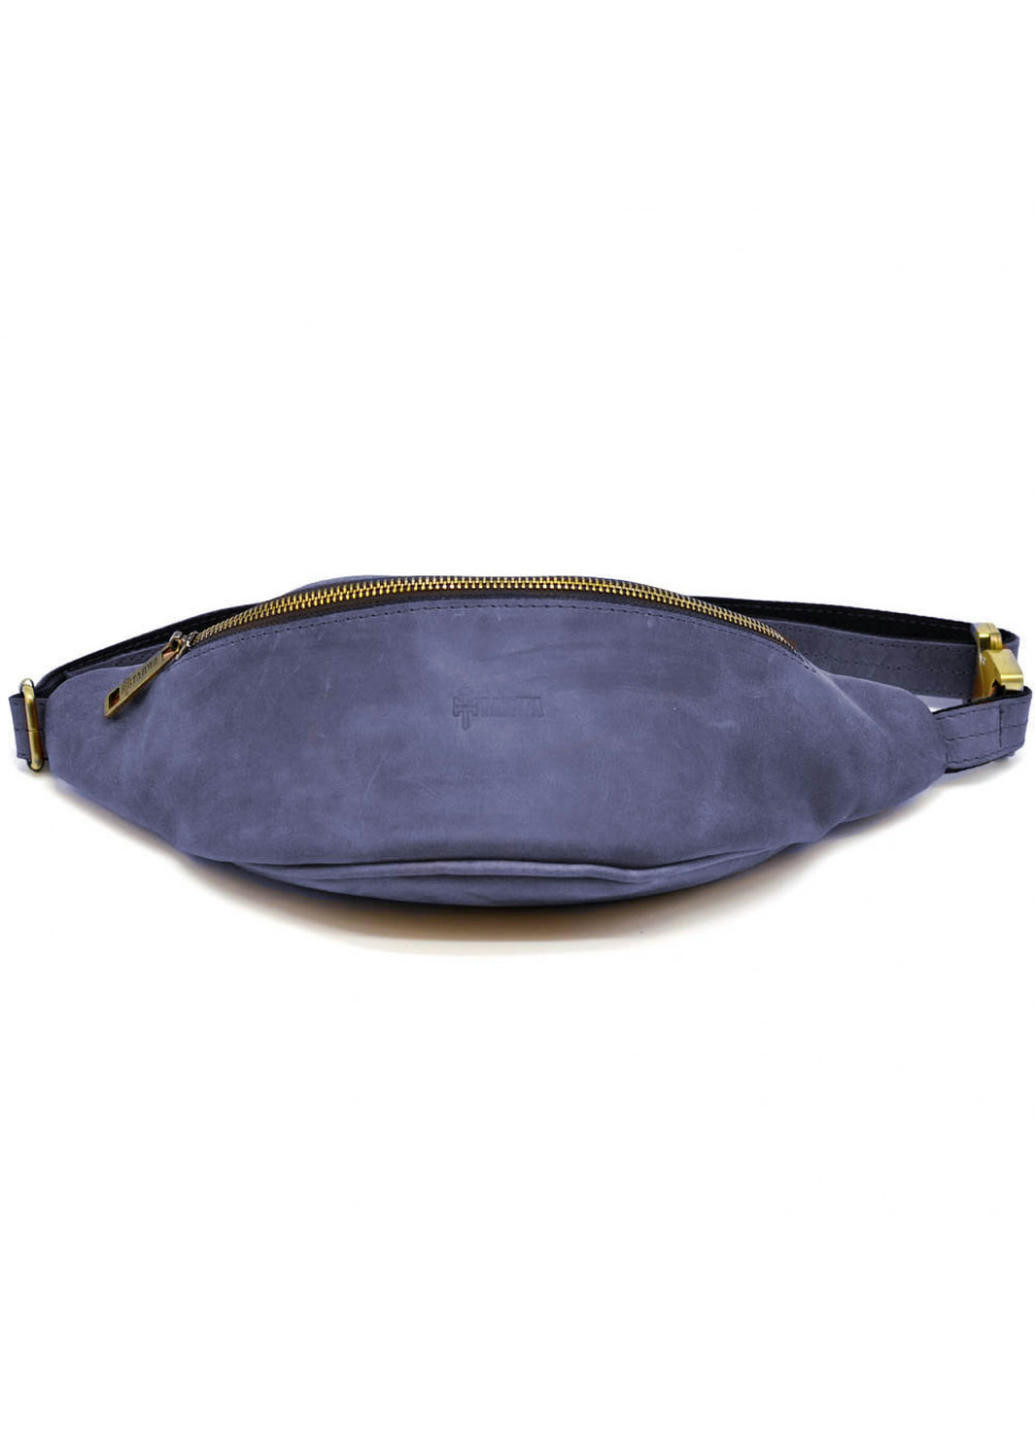 Напоясная сумка синяя из натуральной кожи RK-3035-3md TARWA (257657250)